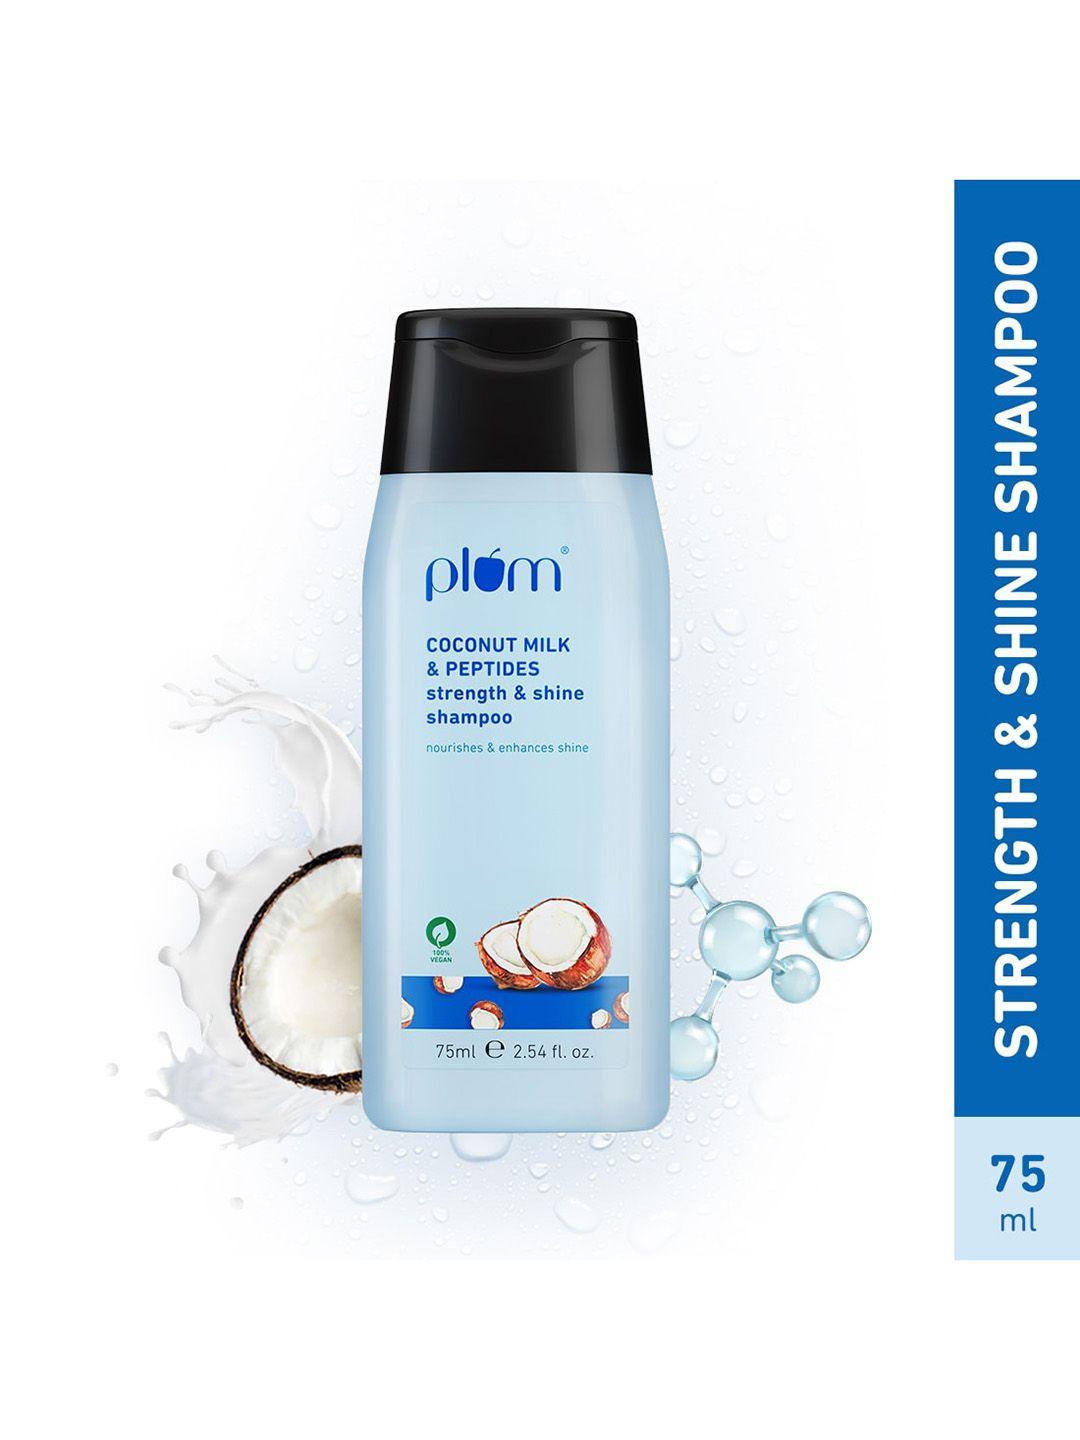 plum coconut milk & peptides strength & shine shampoo - 75ml